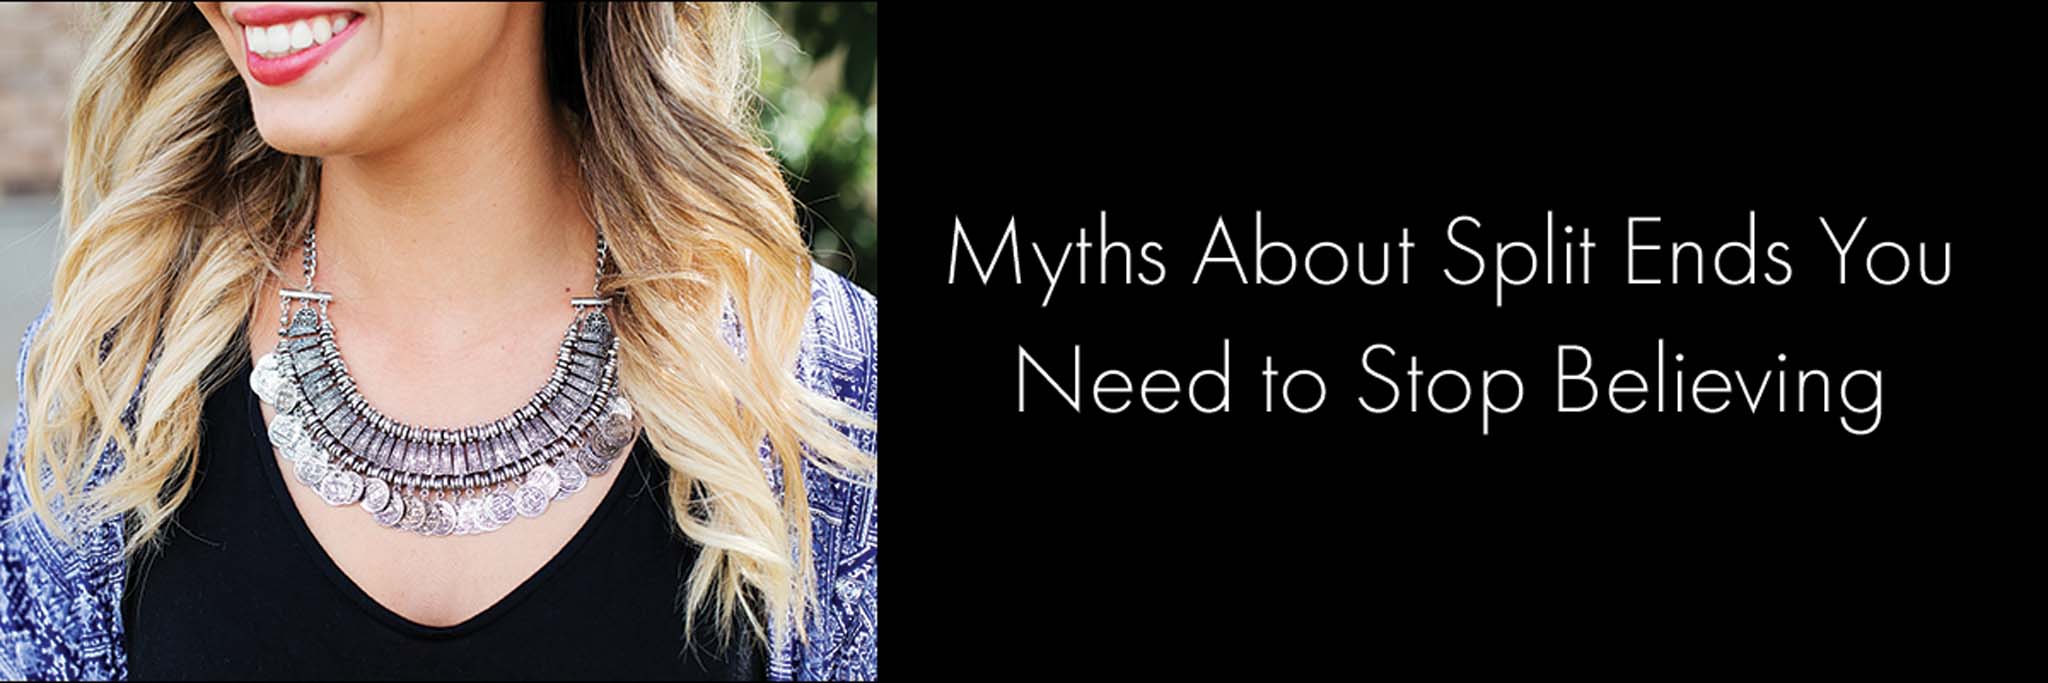 myths about split ends